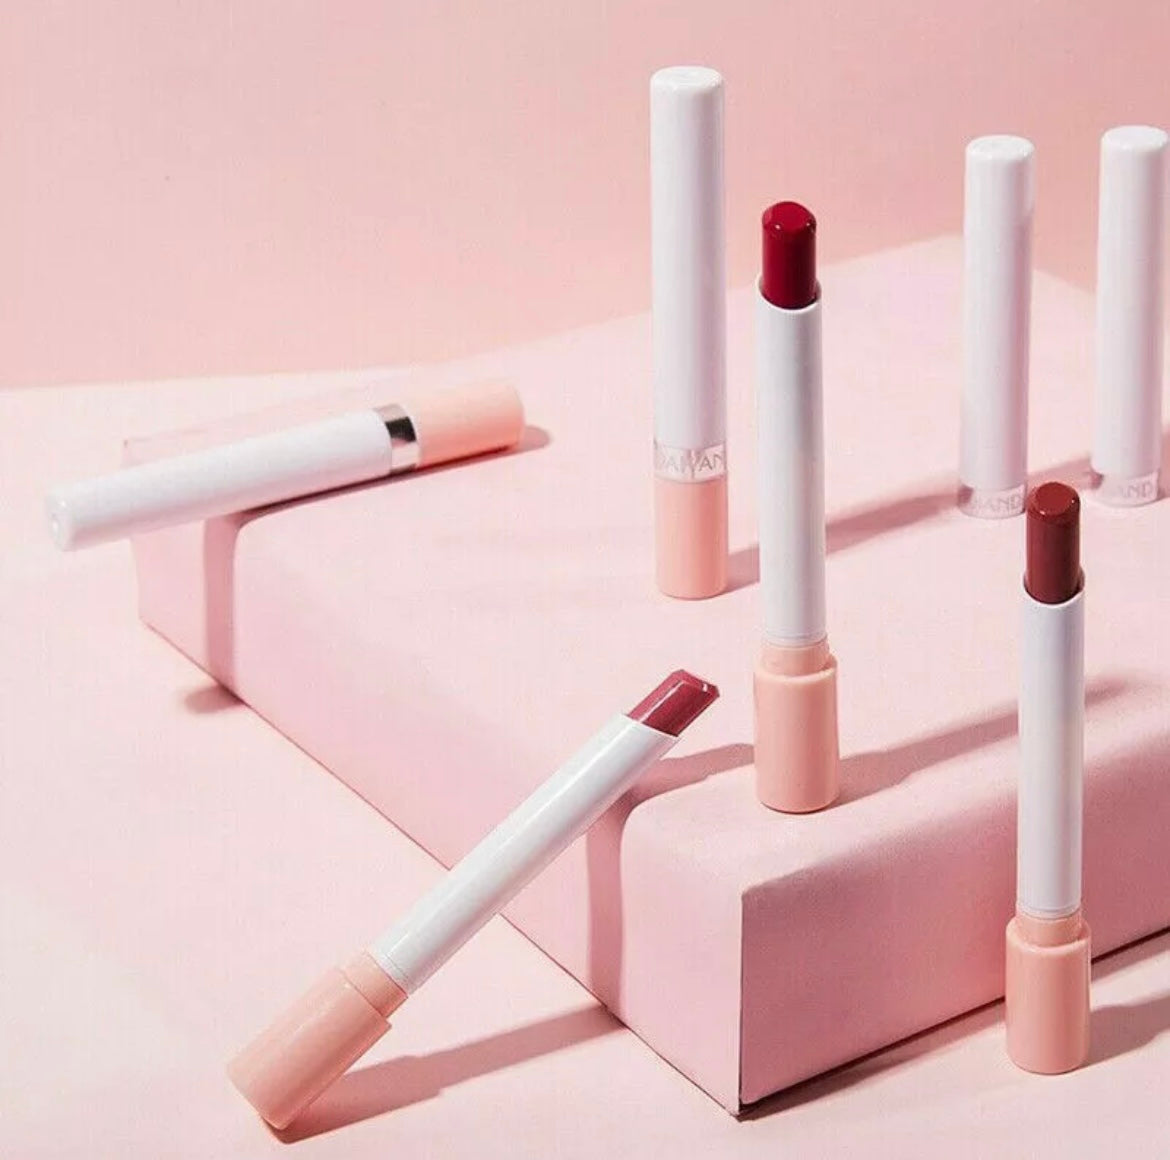 Cigarette Matte Lipstick Kits